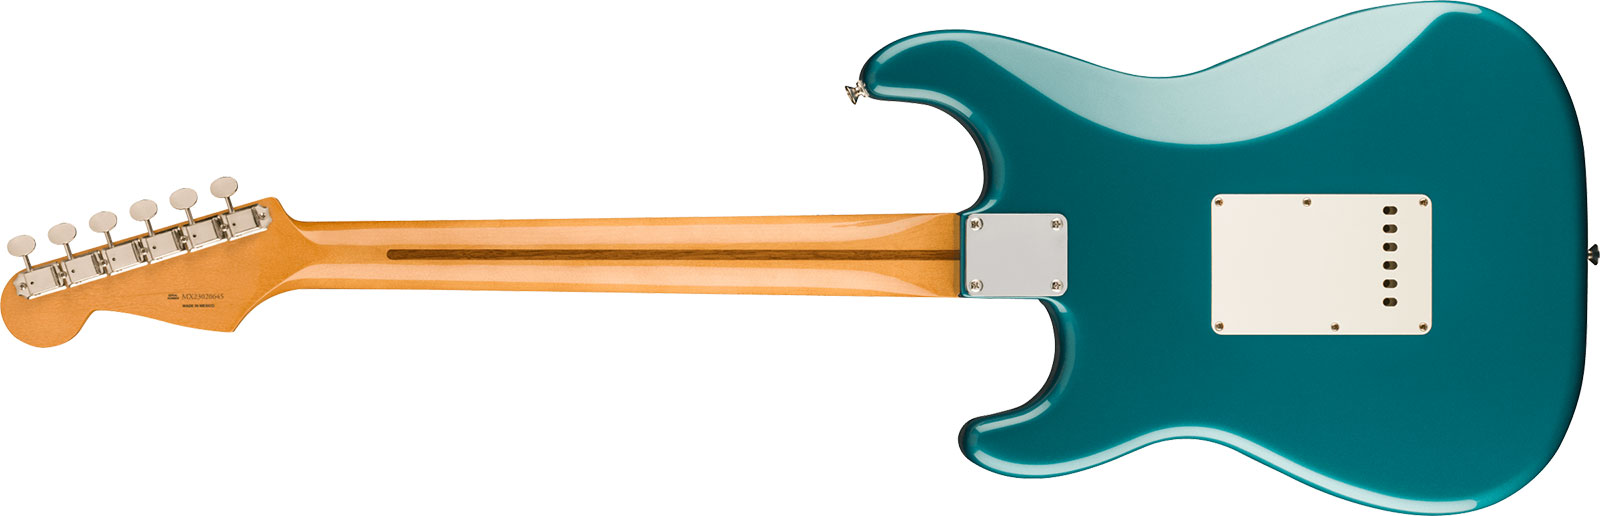 Fender Strat 50s Vintera 2 Mex 3s Trem Mn - Ocean Turquoise - E-Gitarre in Str-Form - Variation 1